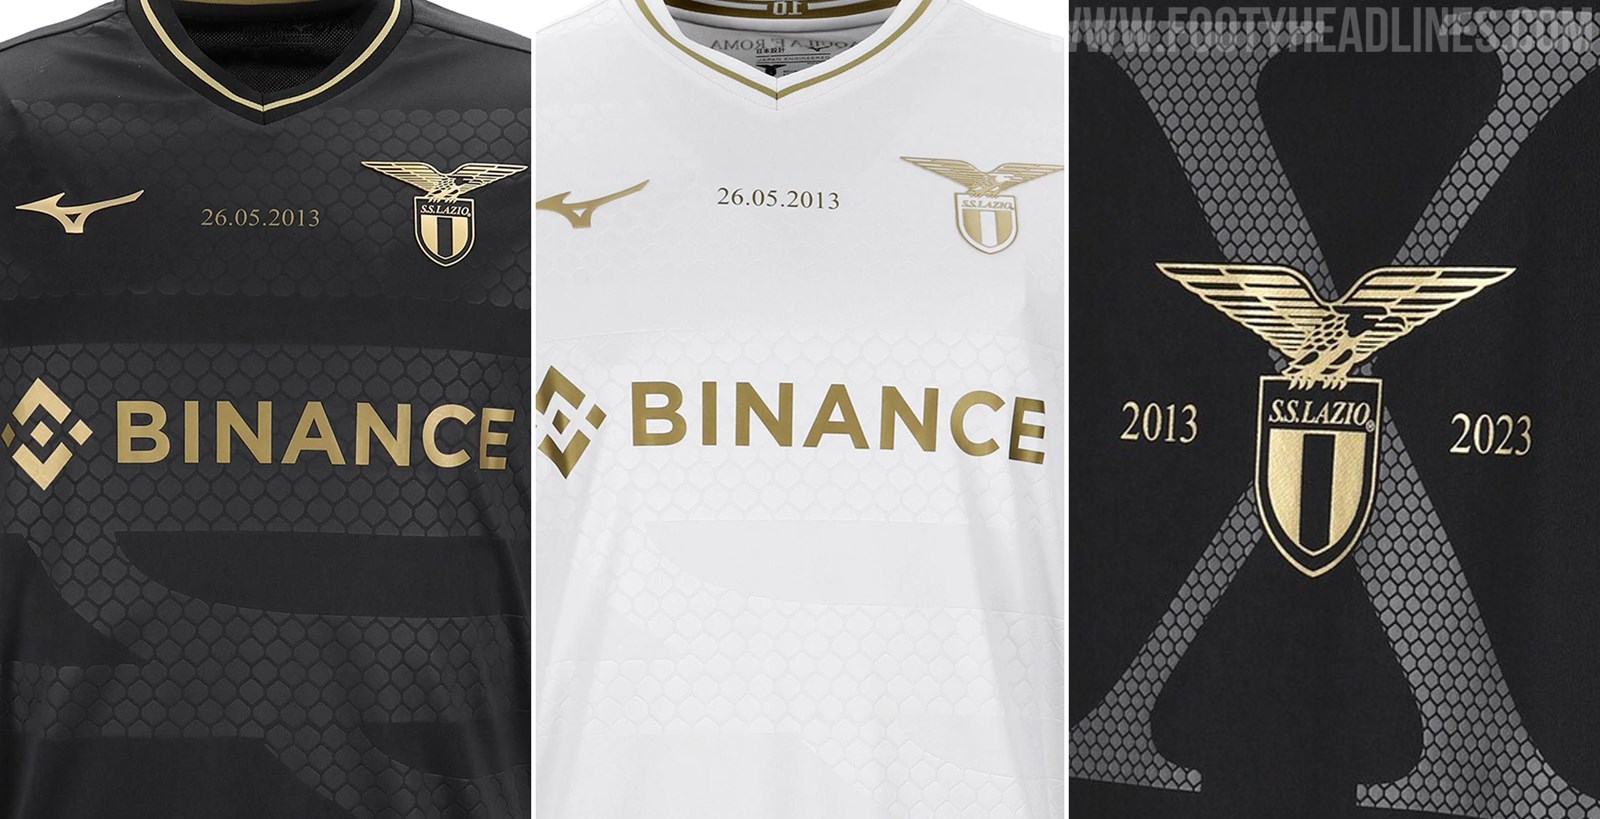 Lazio 2023 Coppa Italia 10th Anniversary Kit Released - Footy Headlines